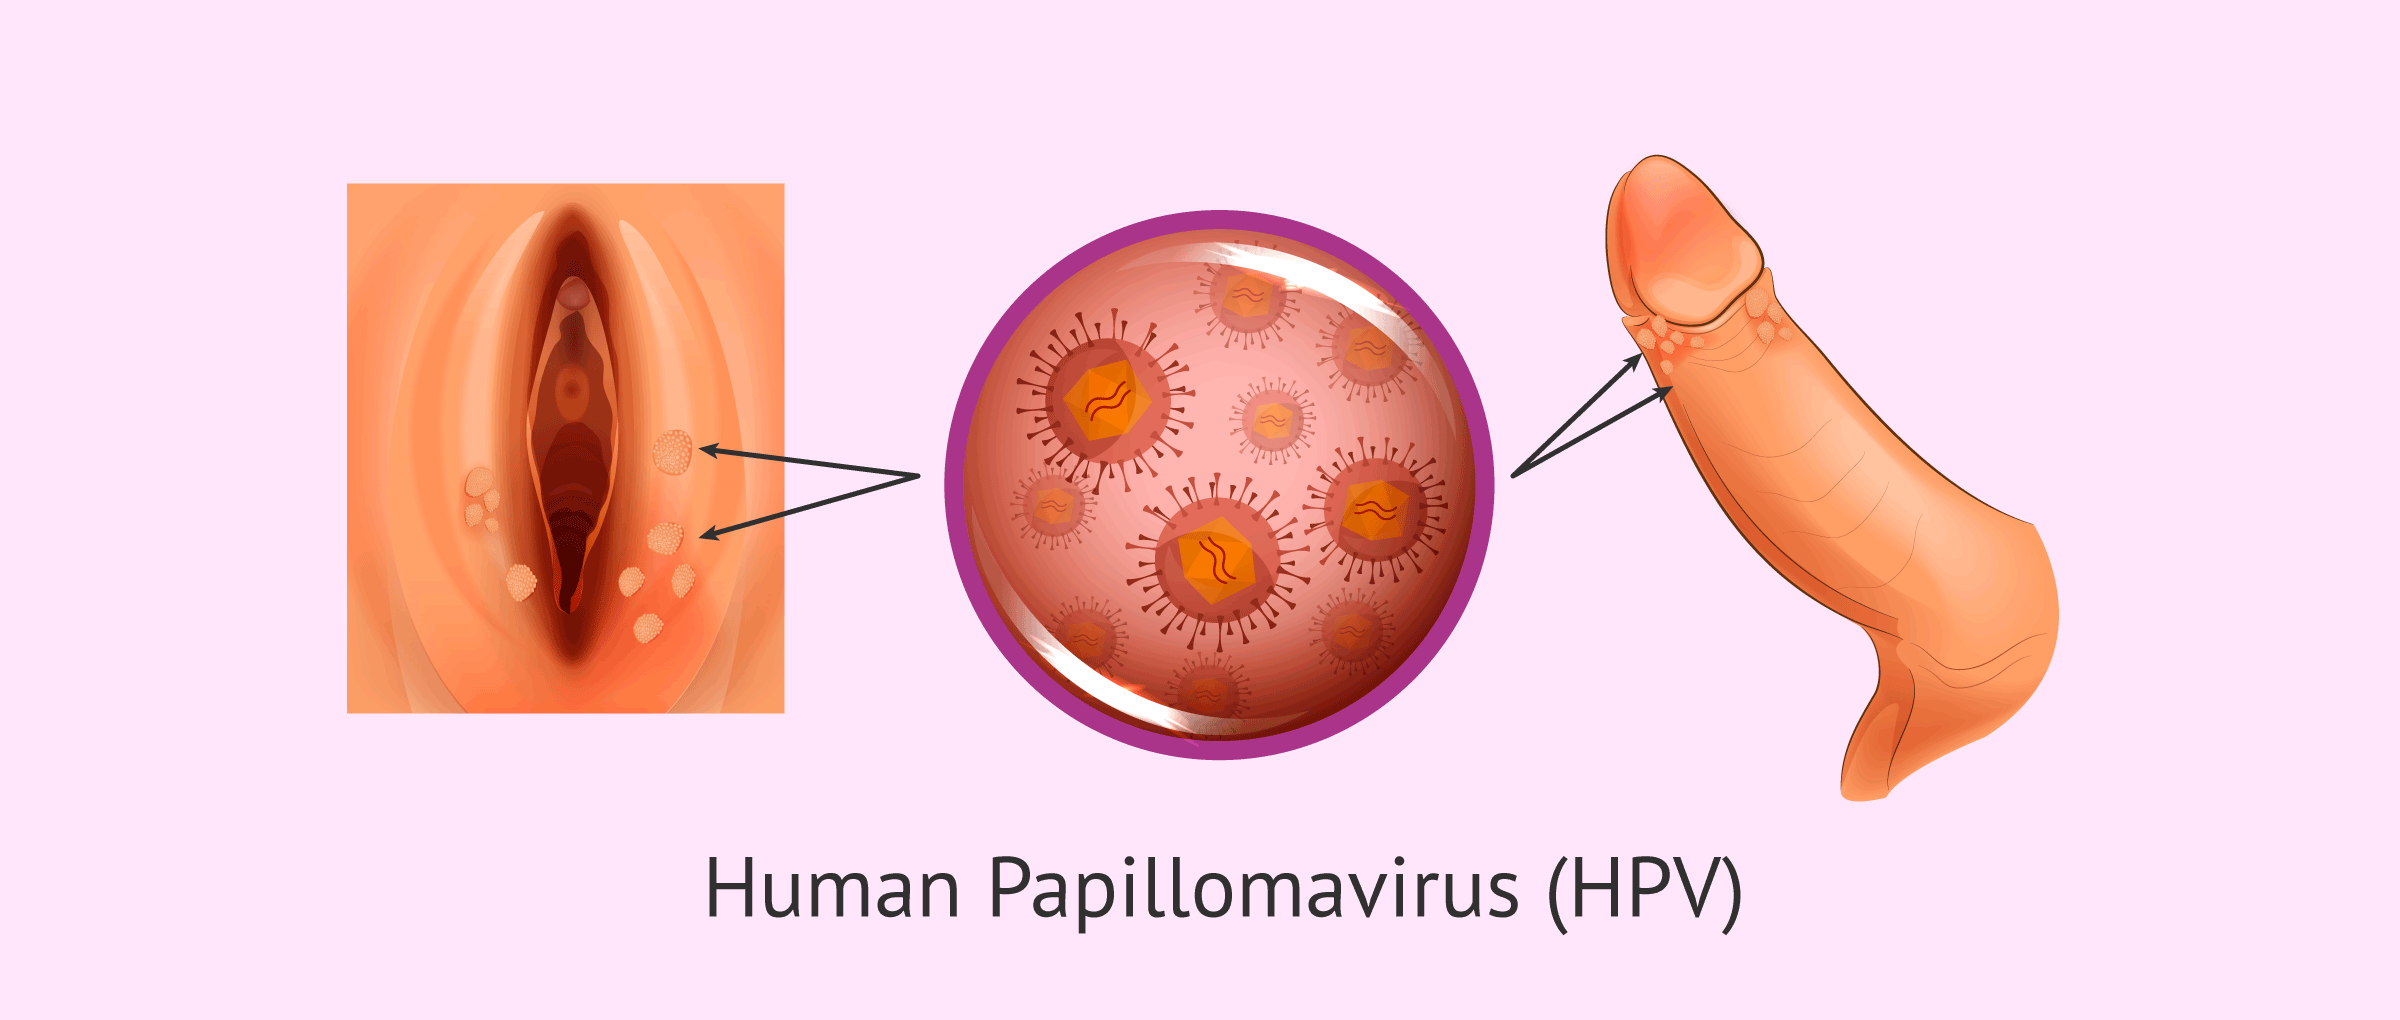 Vestibular papillomatosis with genital warts